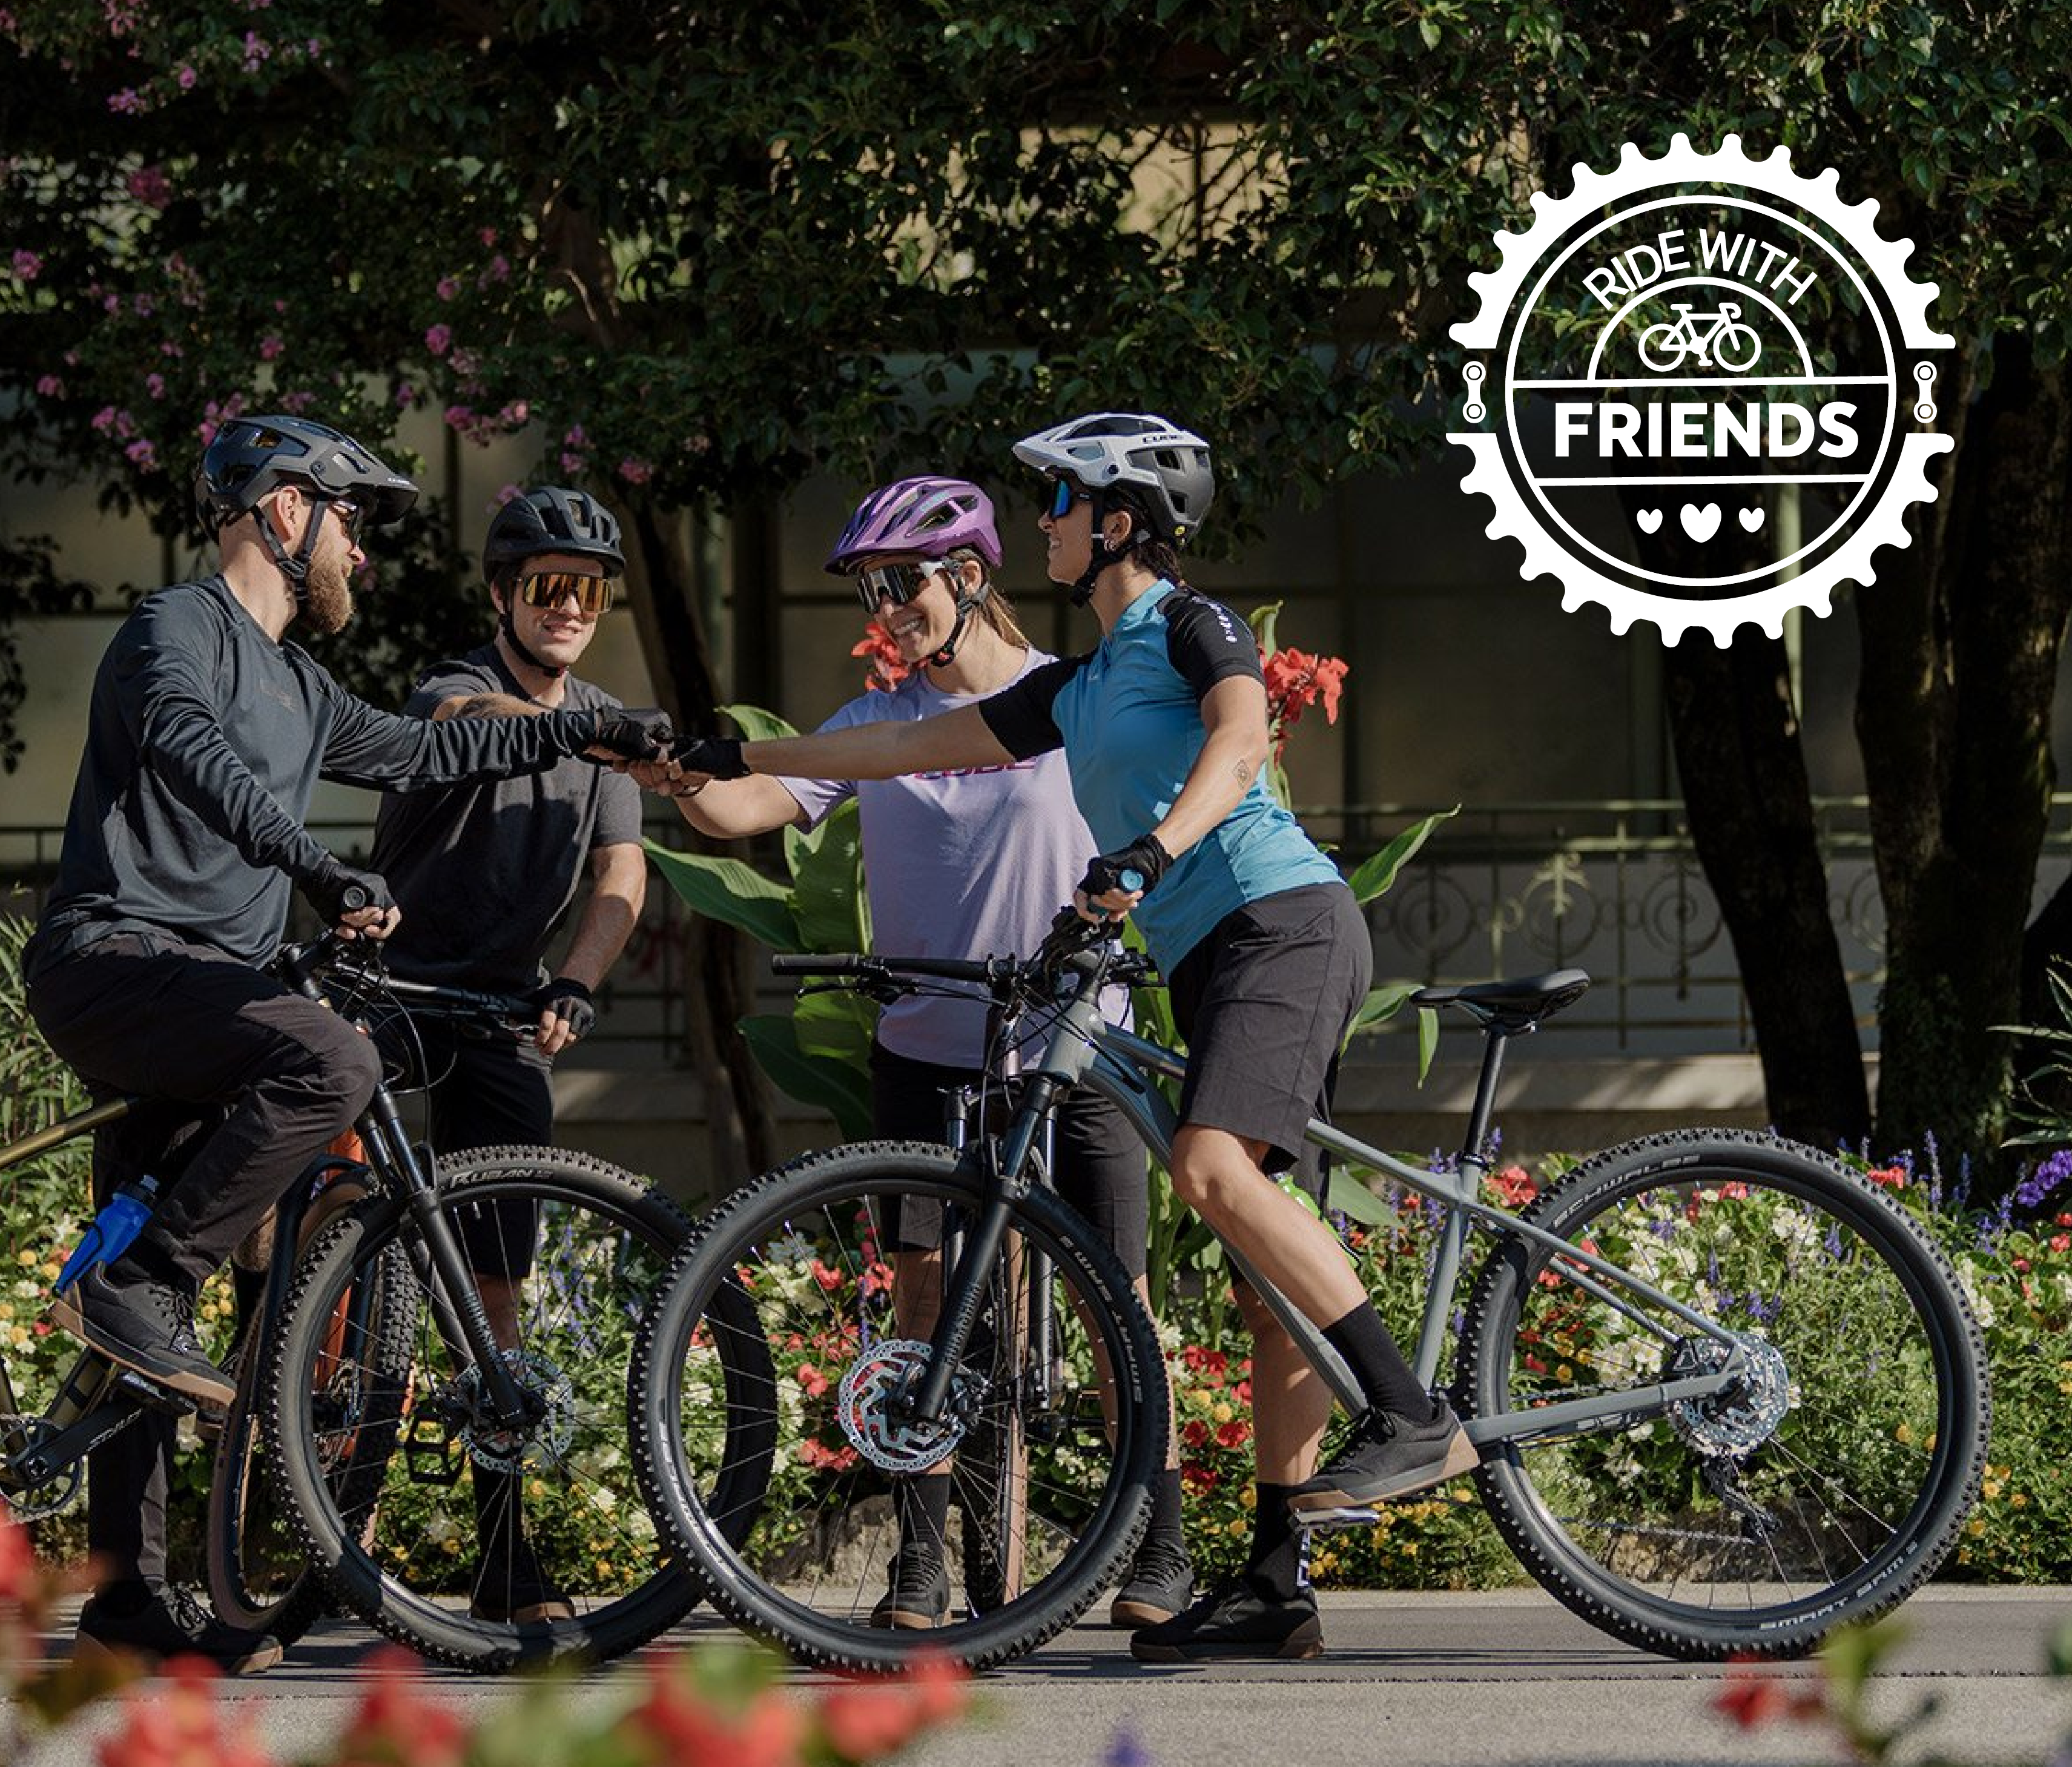  Tienda de bicicletas - Ciclismo a un click de ti